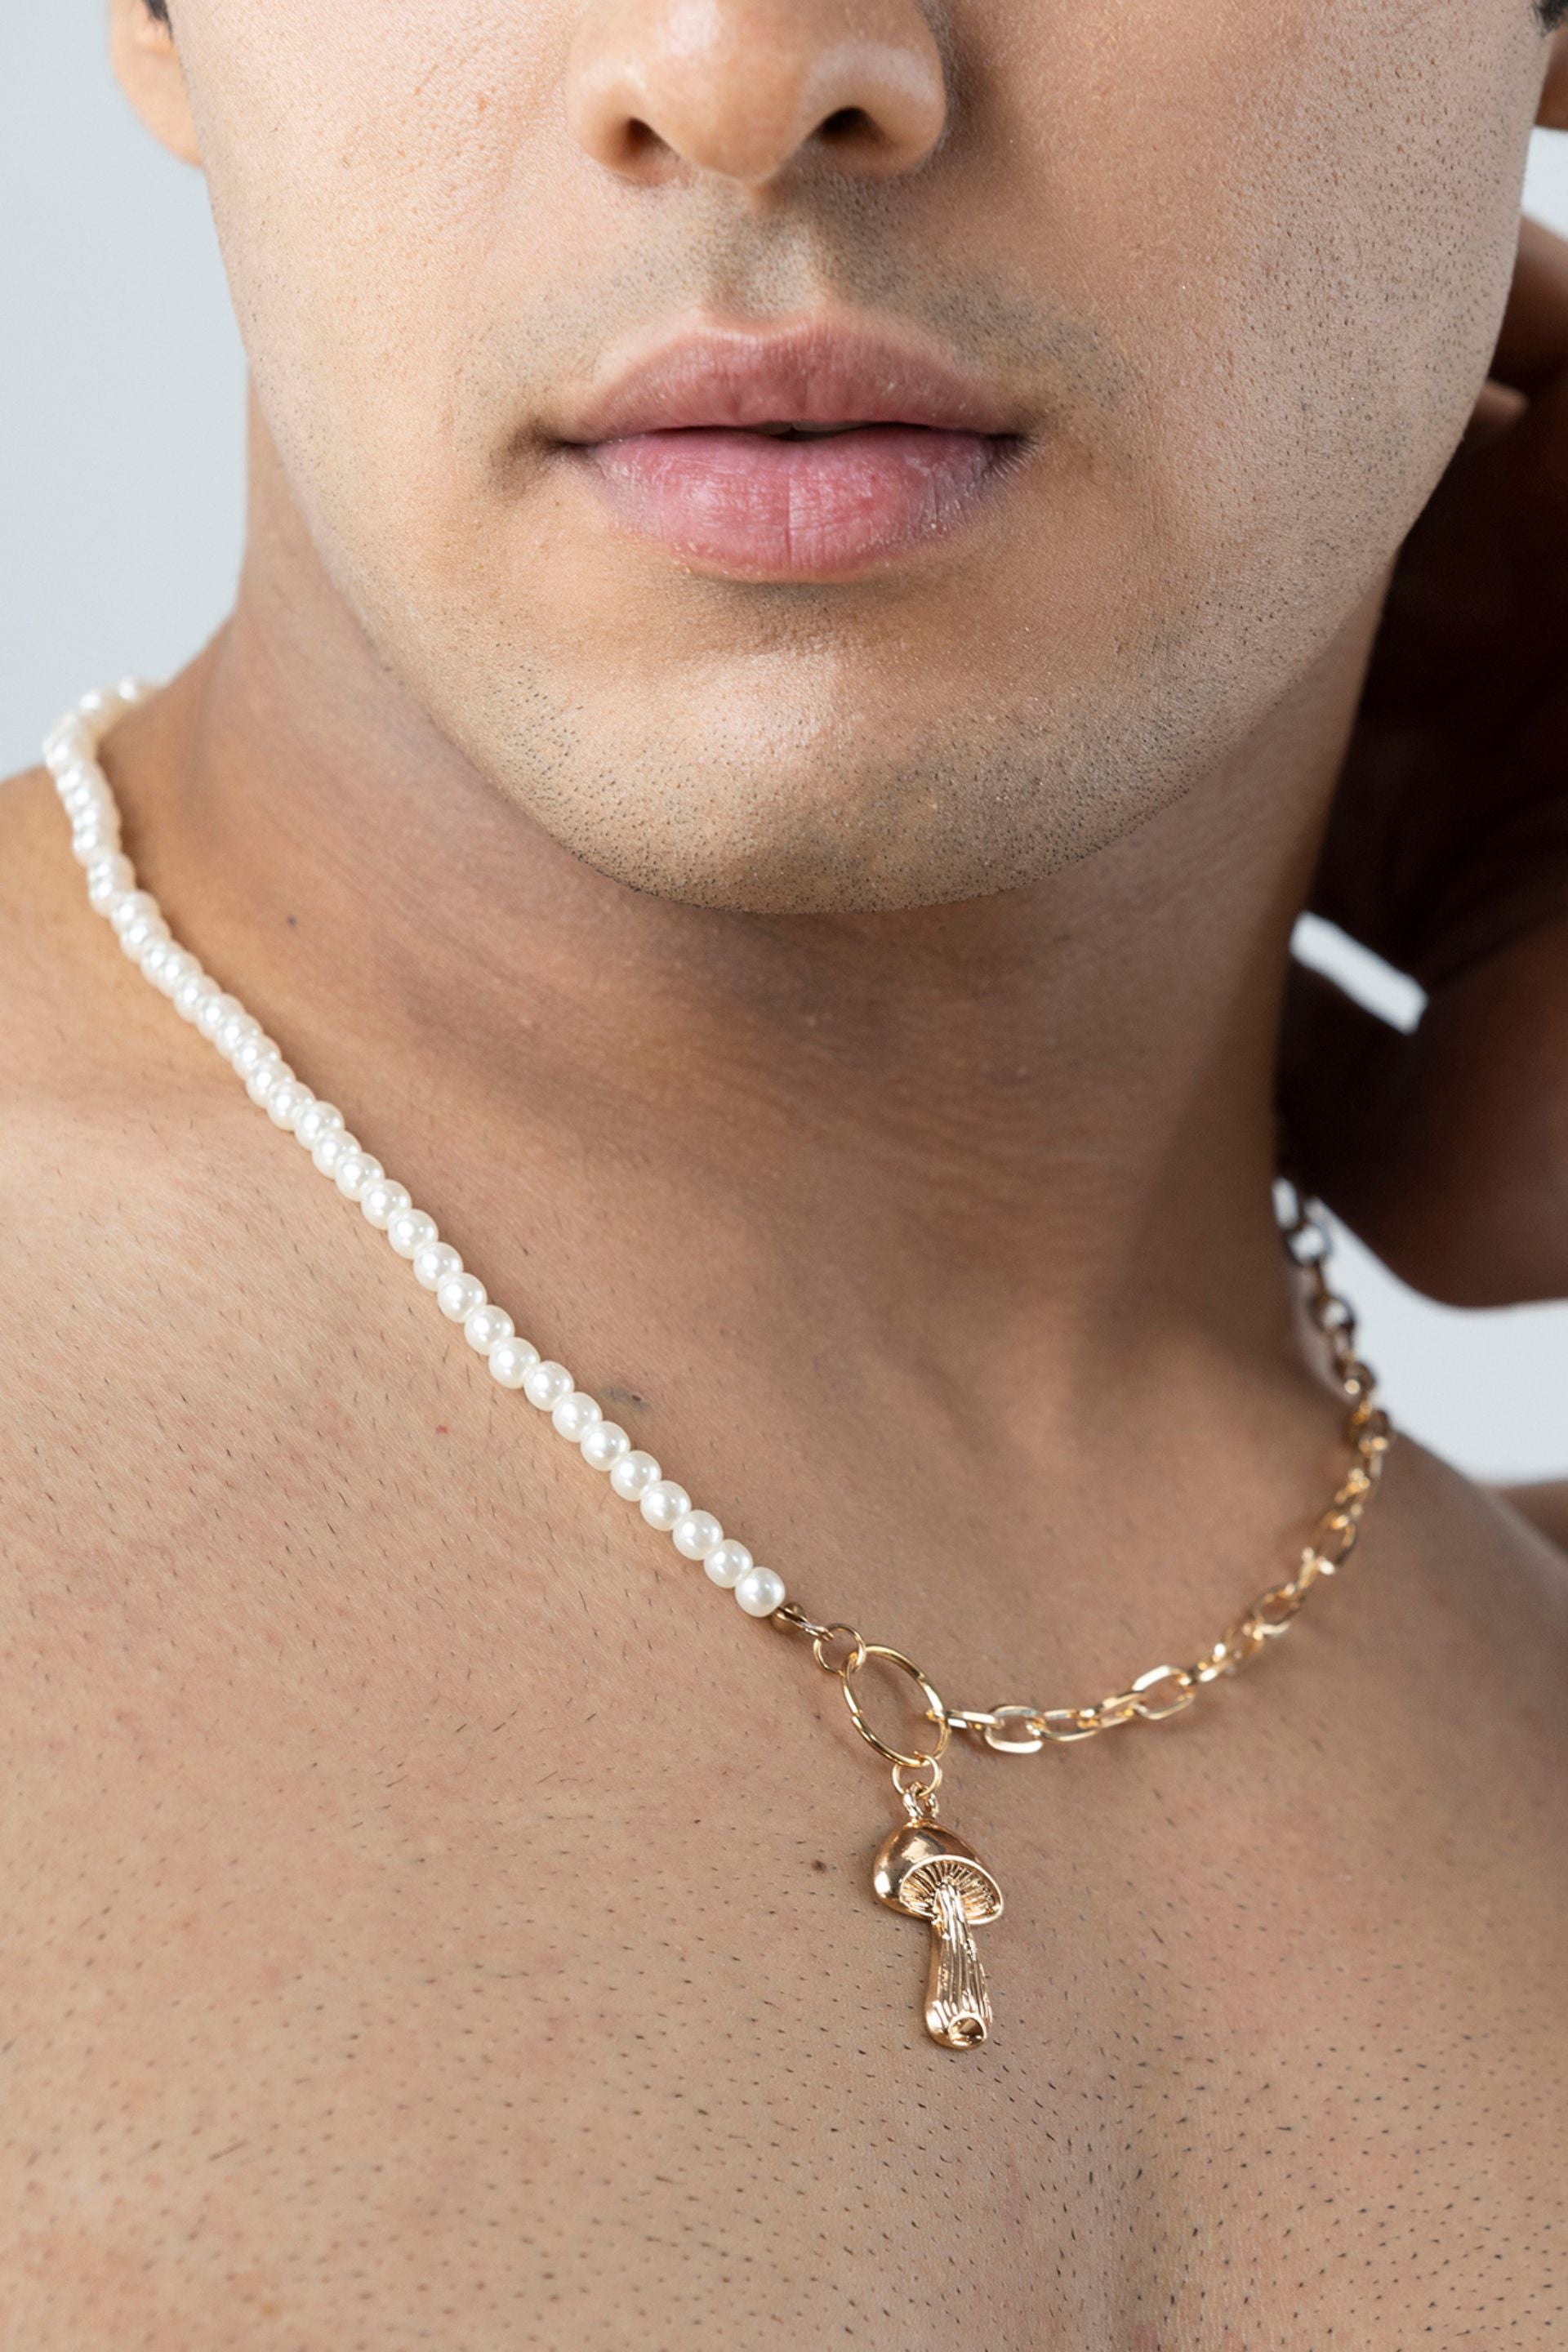 Firangi Yarn White Pearl Mushroom Pendant Necklace For Men